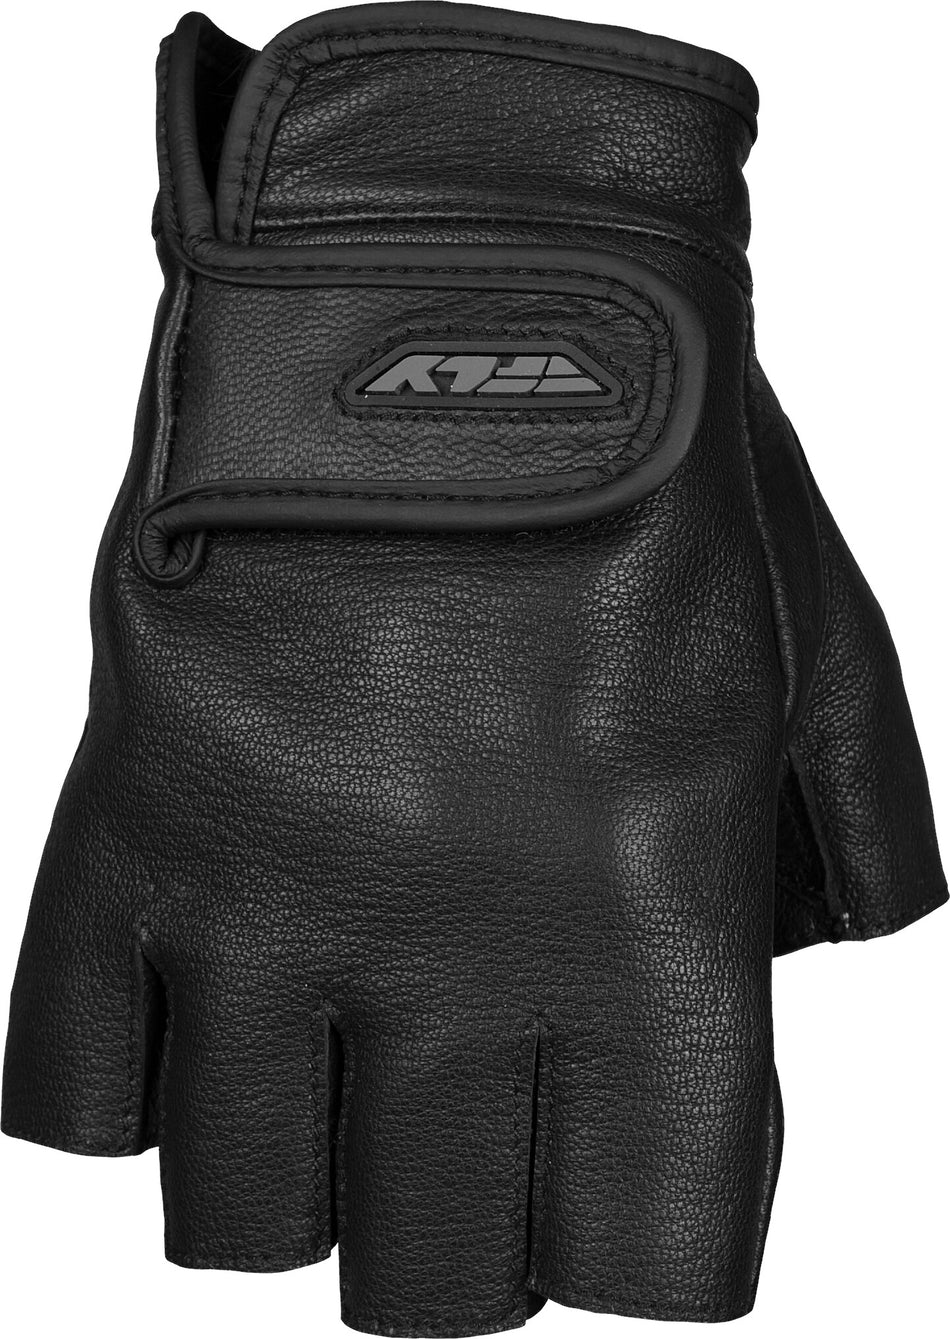 FLY RACING Half-N-Half Fingerless Leather Gloves Lg #5884 476-0030~4